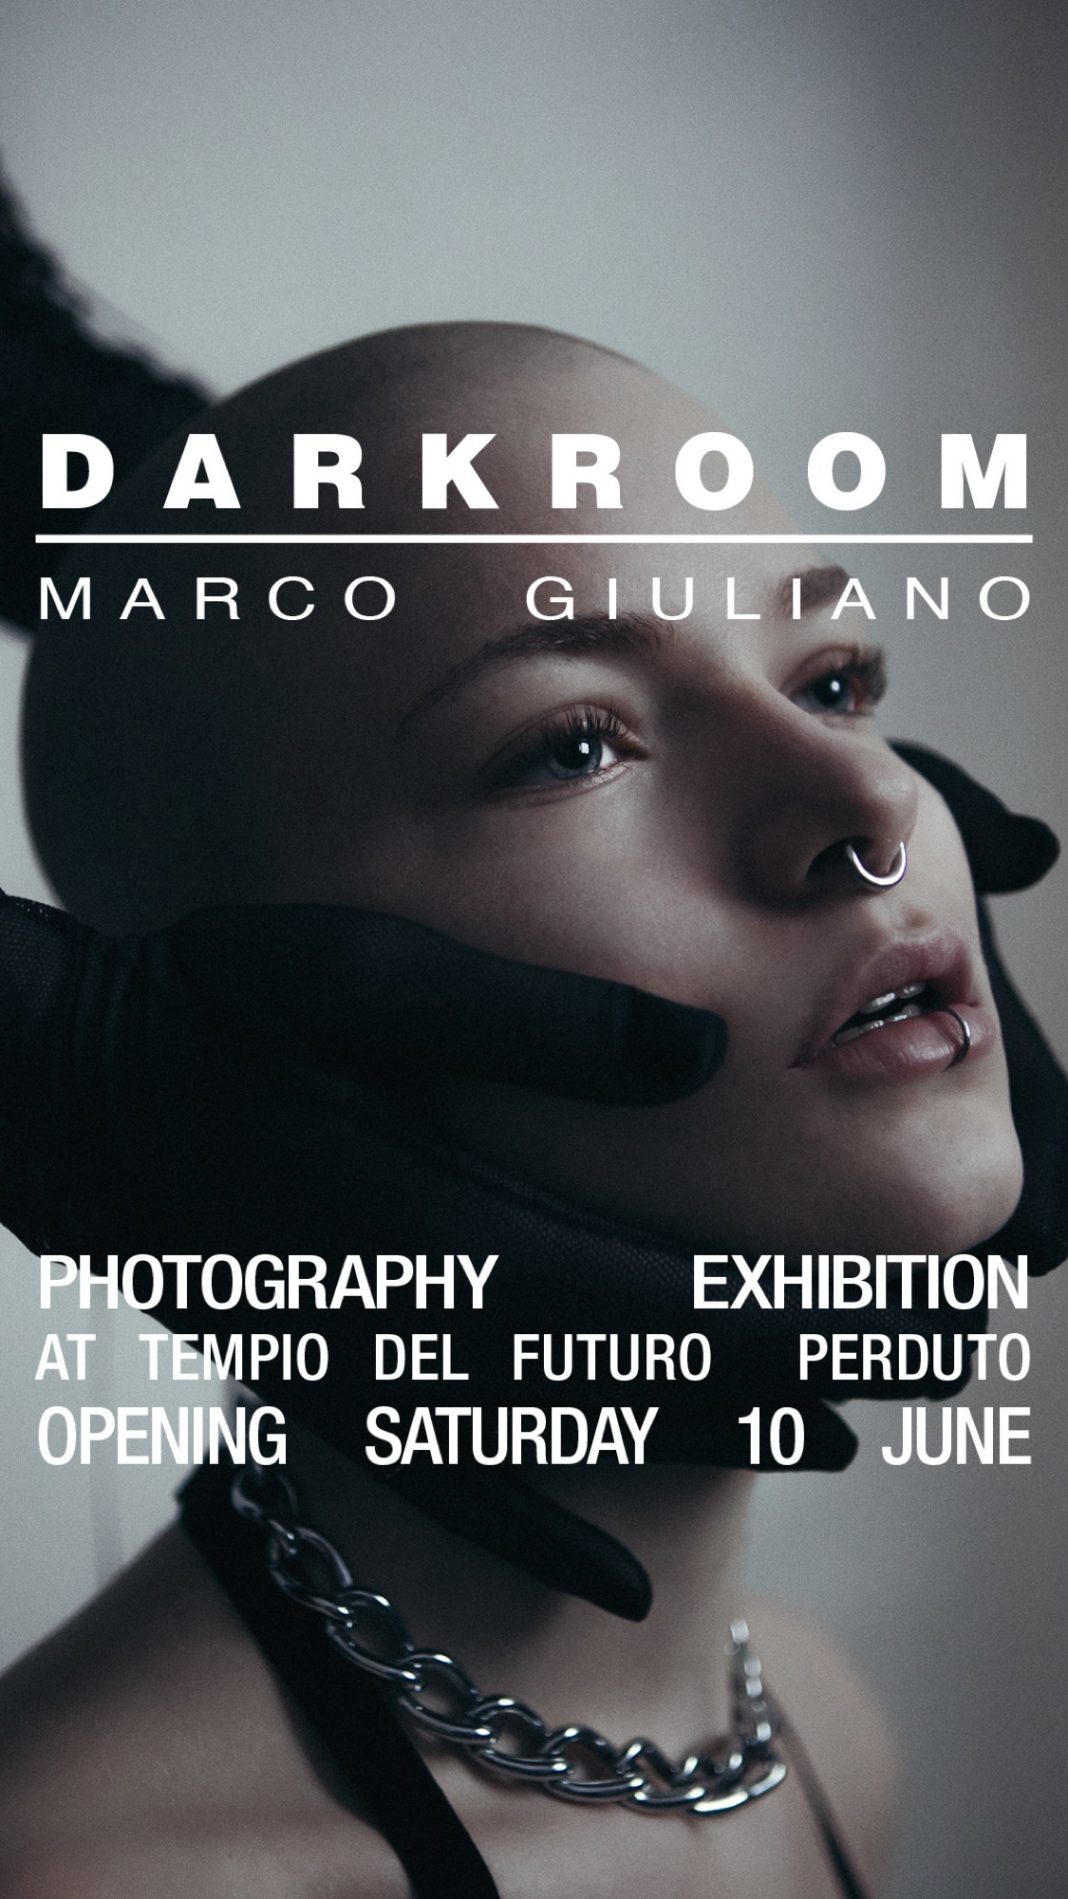 Marco Giuliano – Darkroomhttps://www.exibart.com/repository/media/formidable/11/img/d14/Dark-Room-by-Marco-Giuliano-Invite-1068x1899.jpg